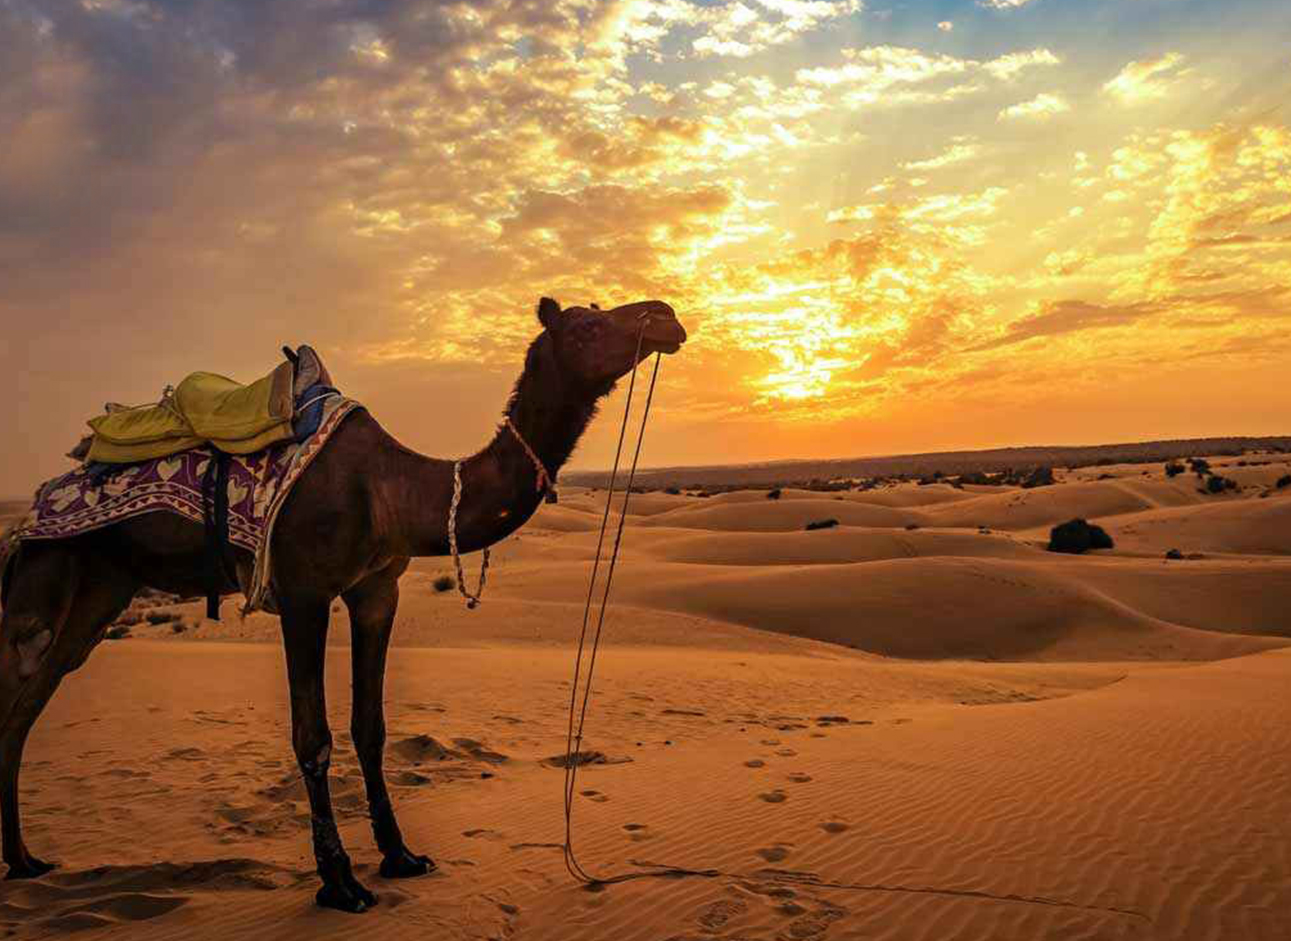 Desert Safari - Adventure and explore the desert landscapes on thrilling safari tours